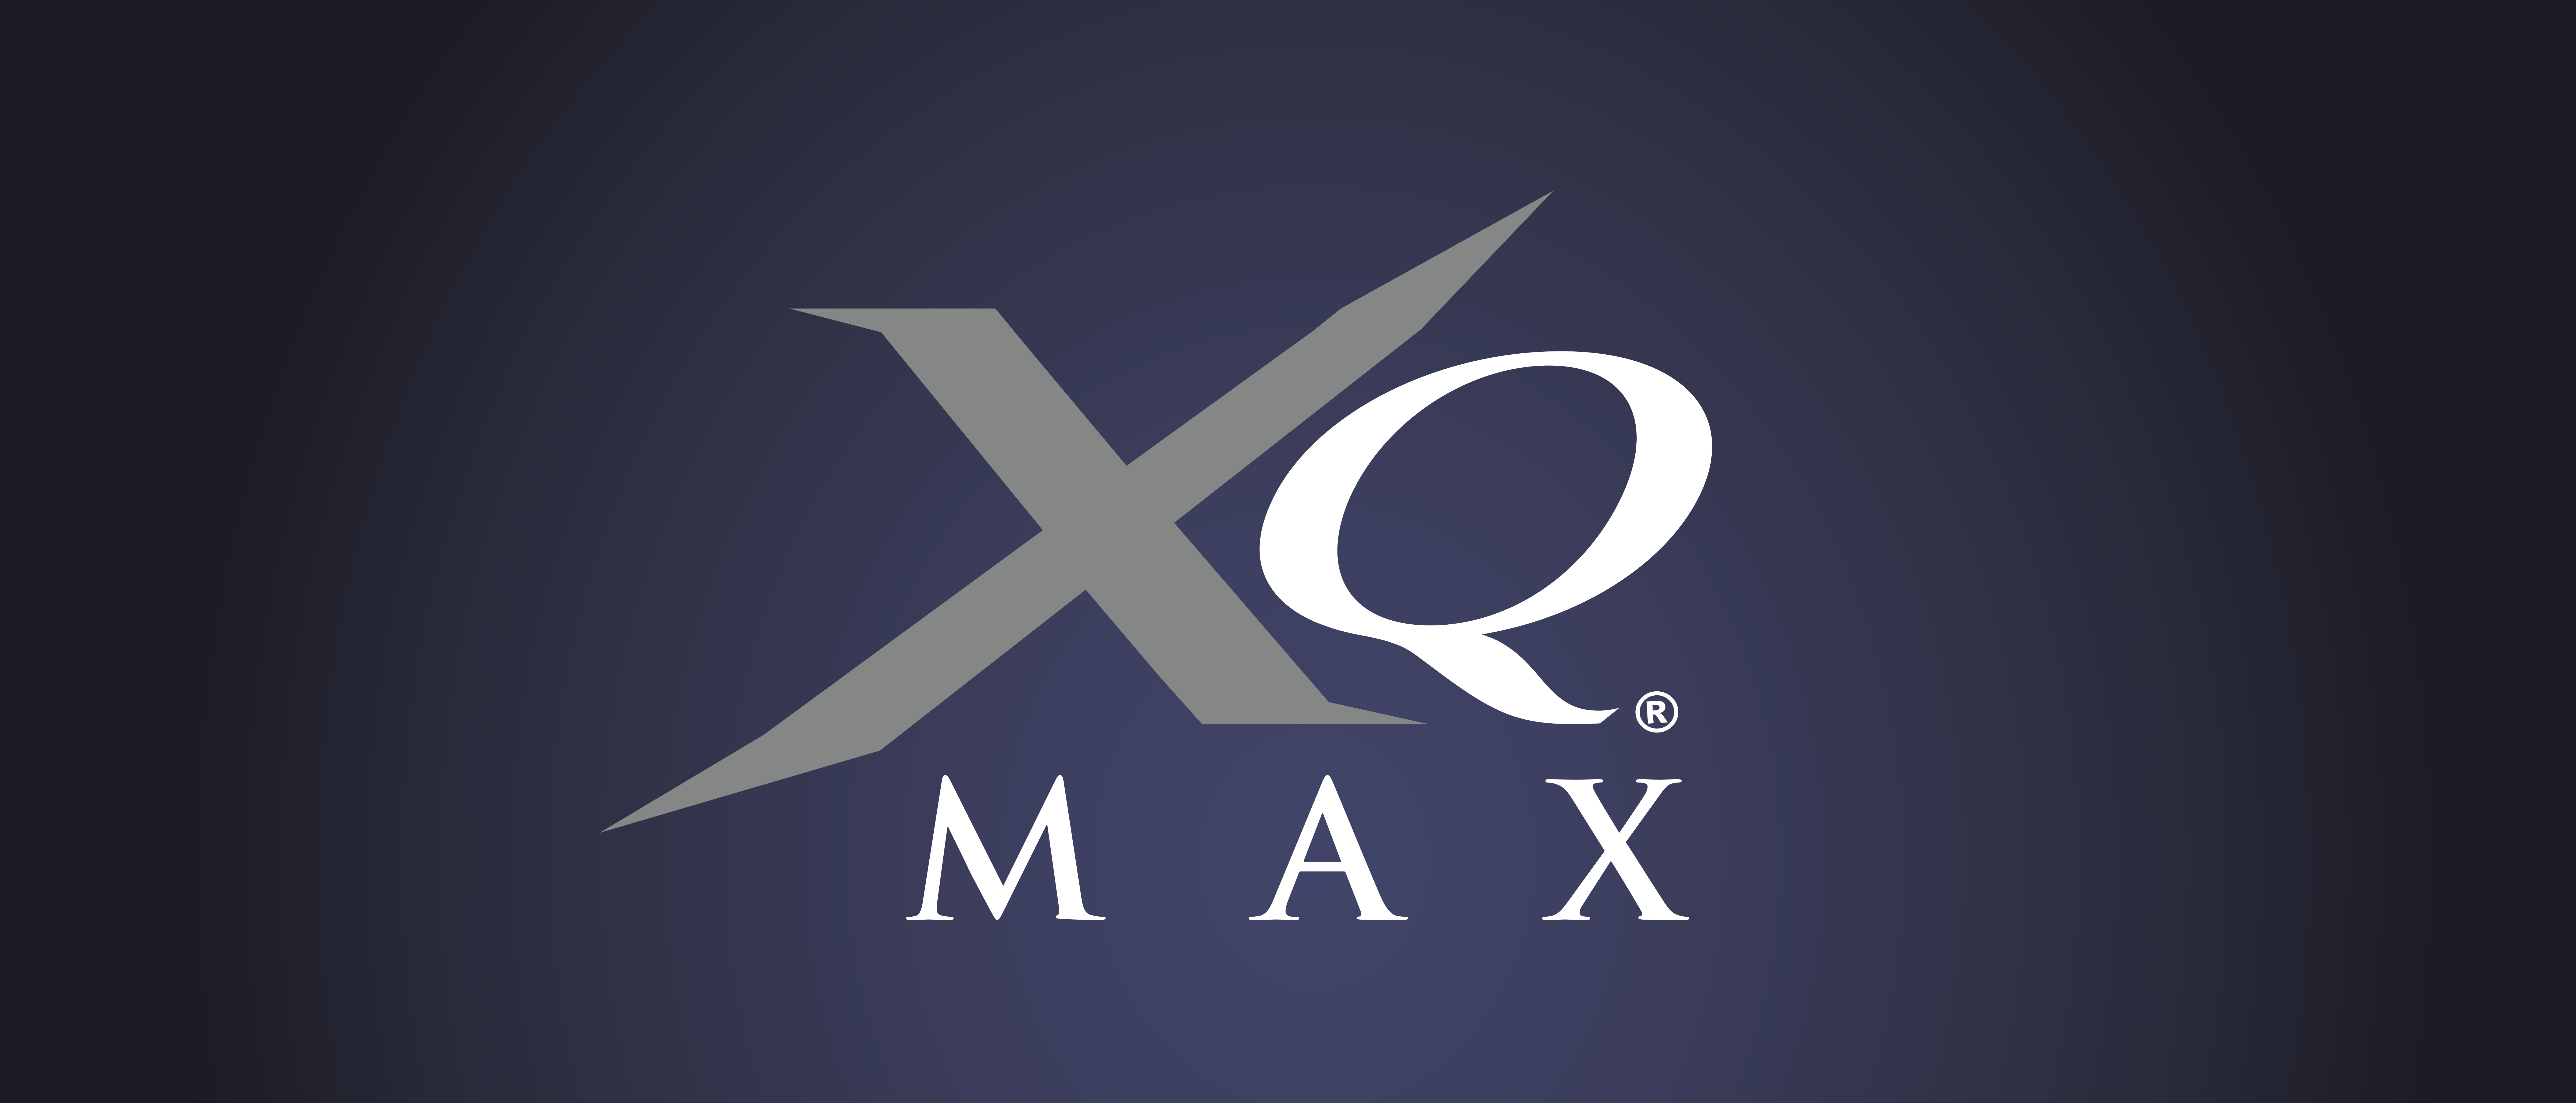 XQ MAX